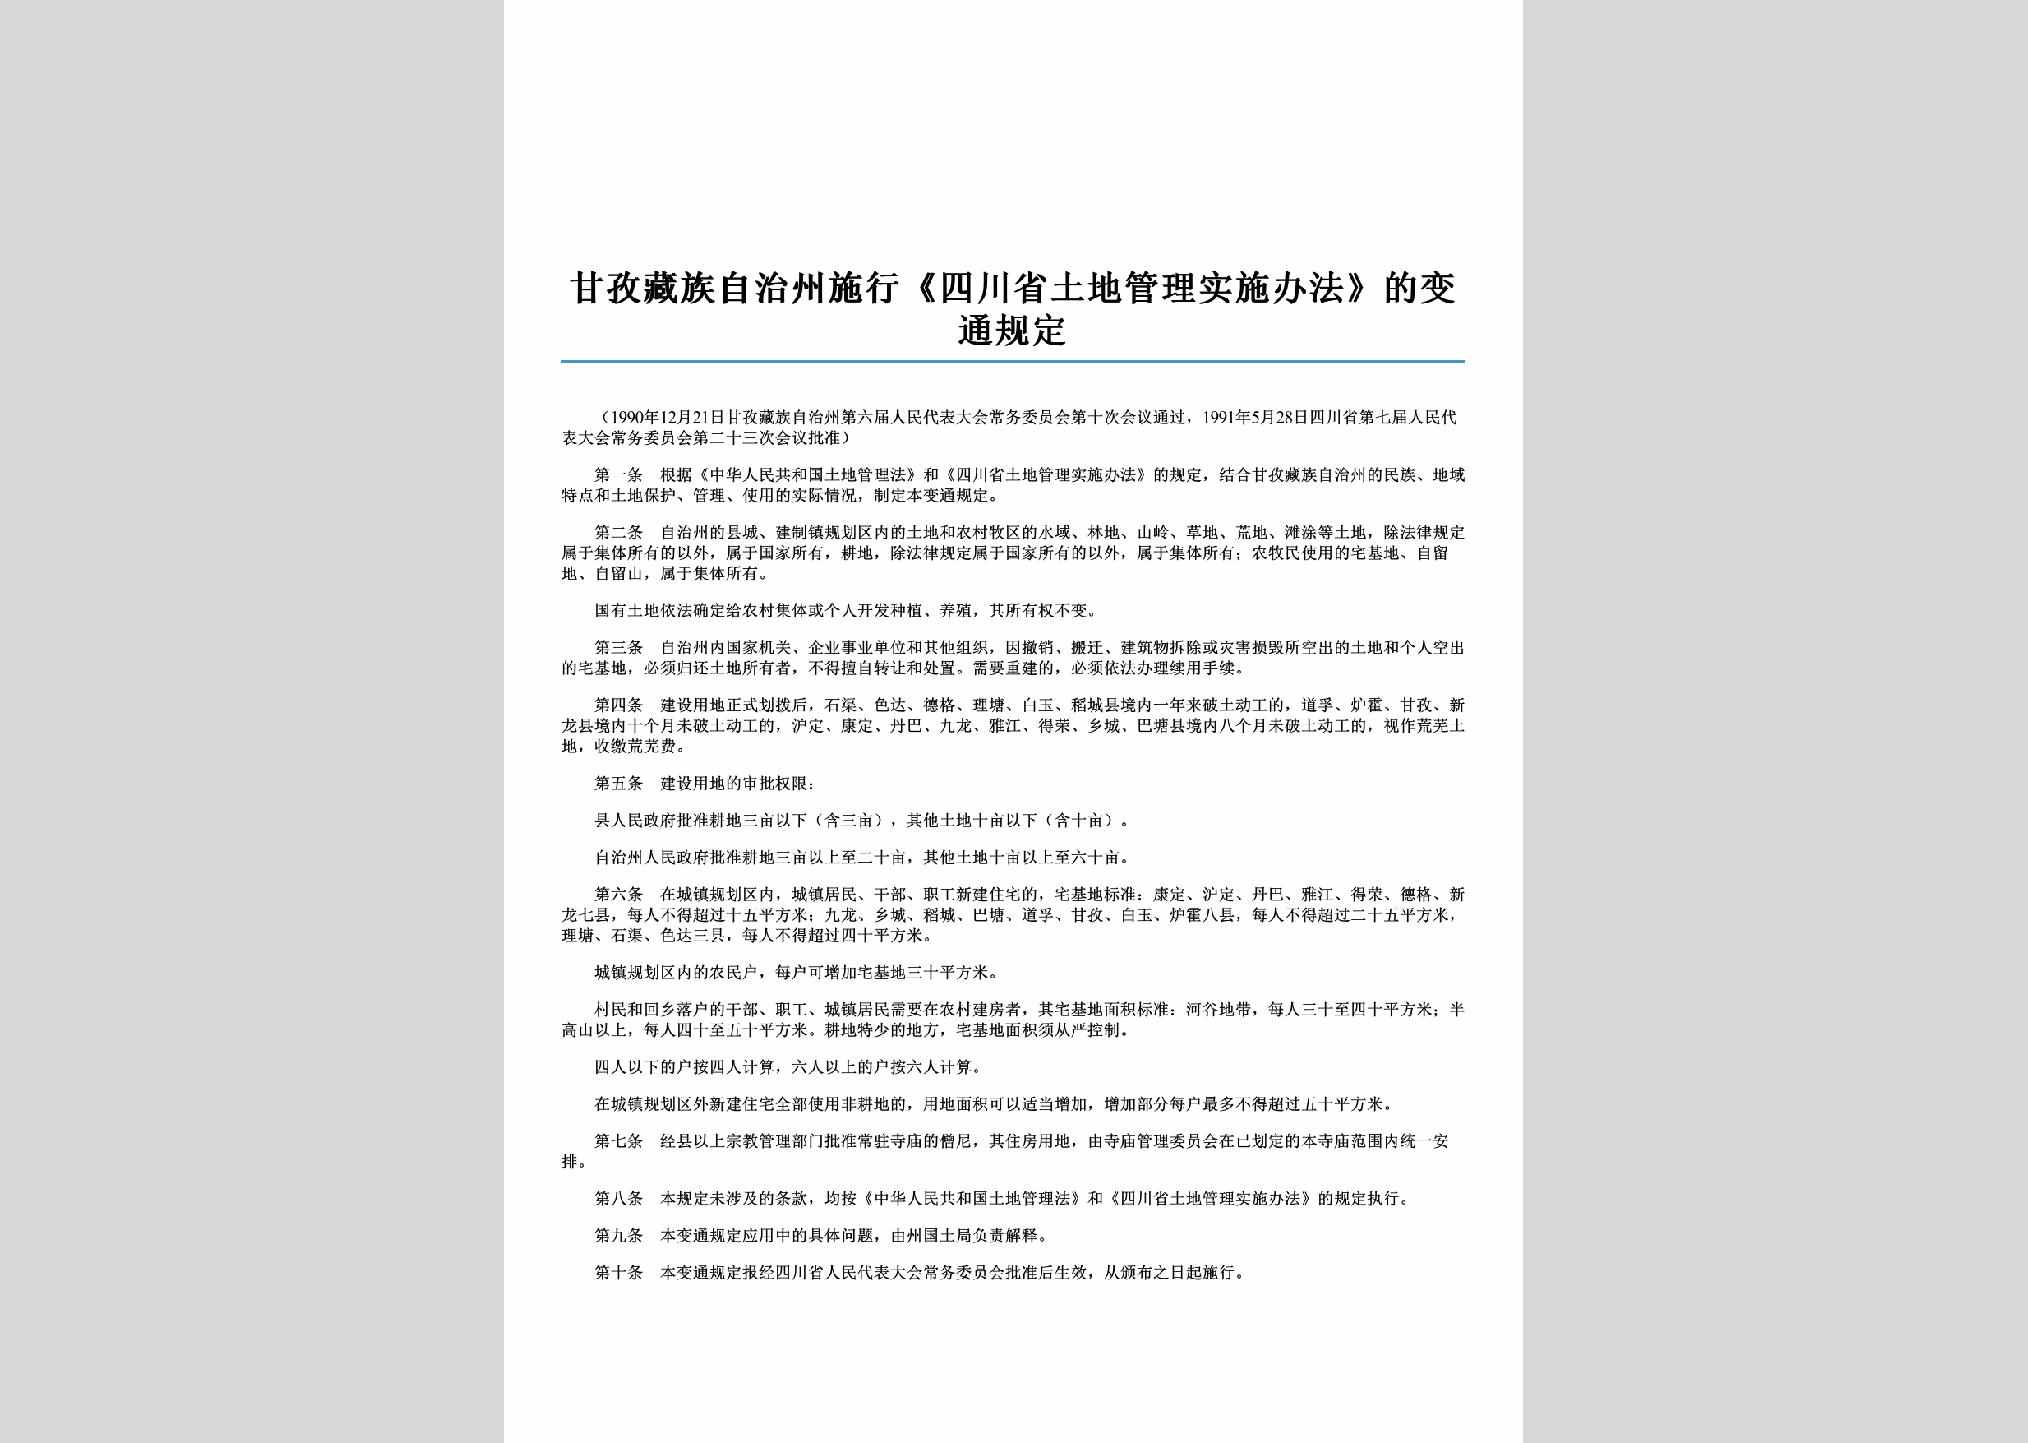 SC-SXTDGLGD-2006：甘孜藏族自治州施行《四川省土地管理实施办法》的变通规定